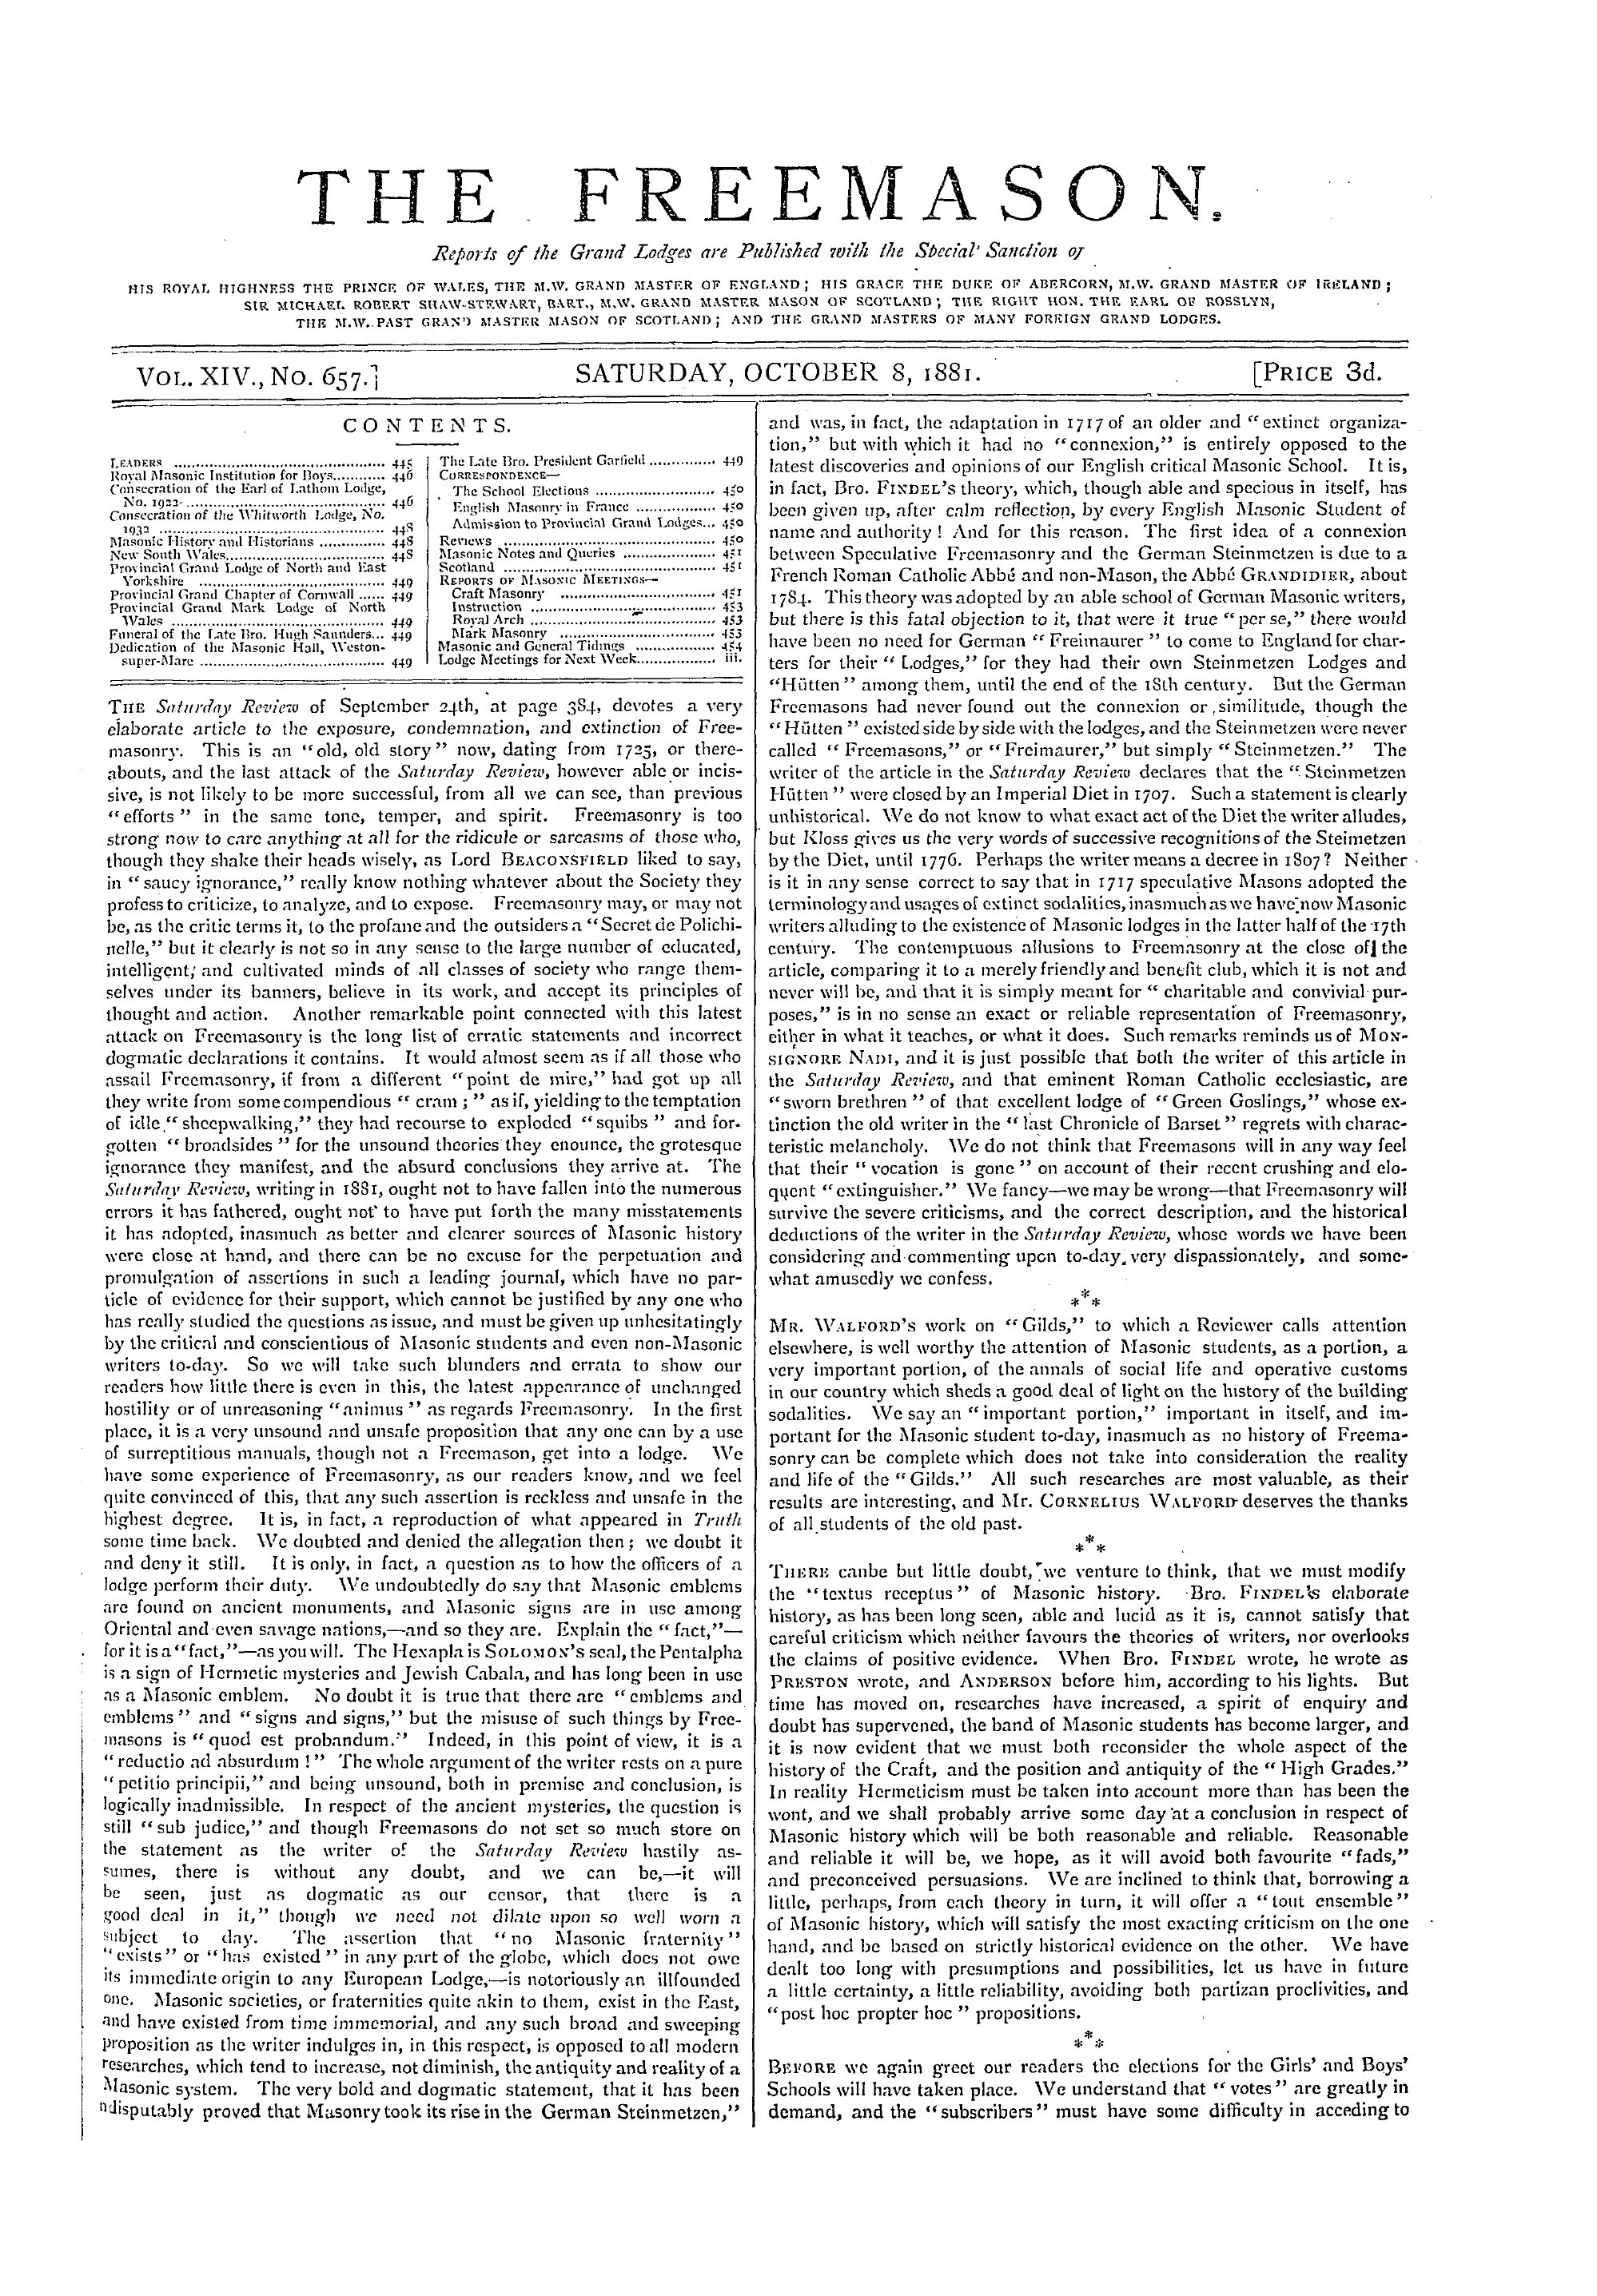 The Freemason: 1881-10-08 - Contents.